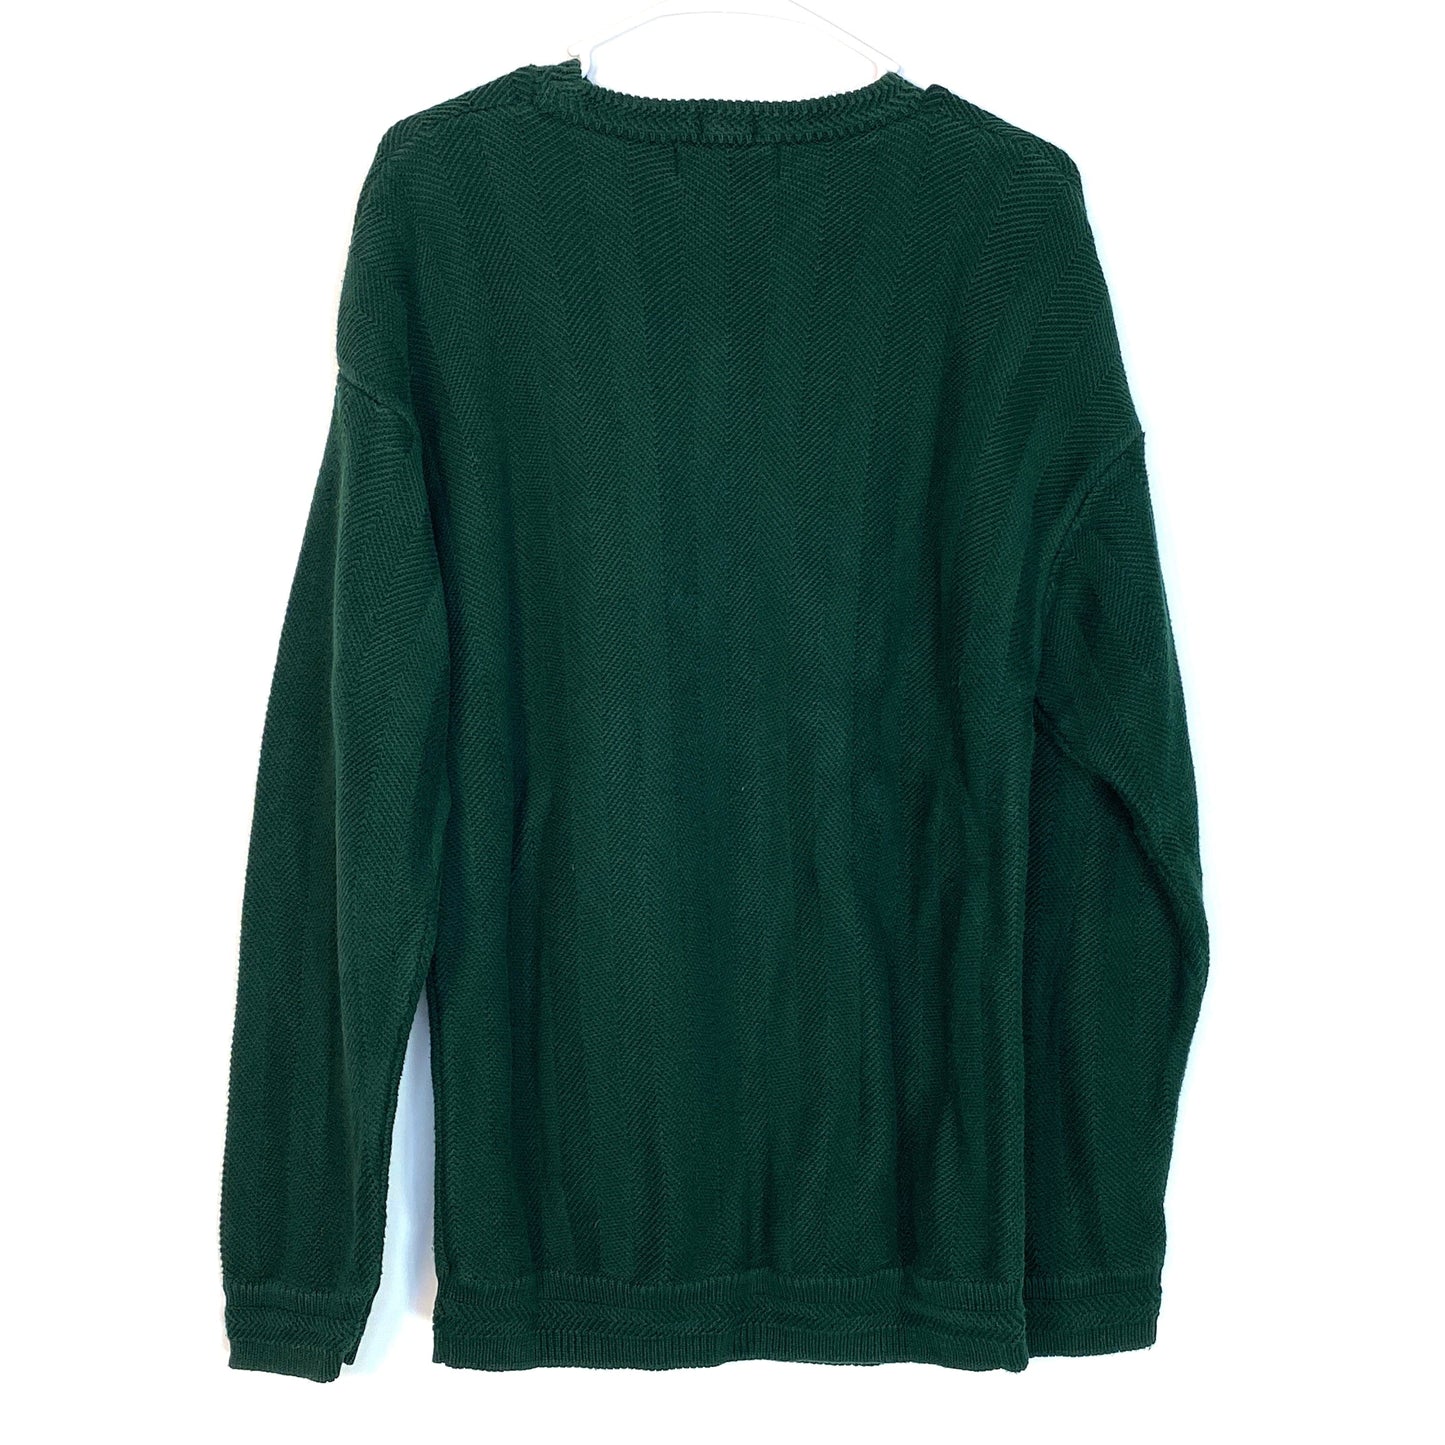 Chaps Ralph Lauren Mens Size M Green Pullover Knit Crewneck Sweater